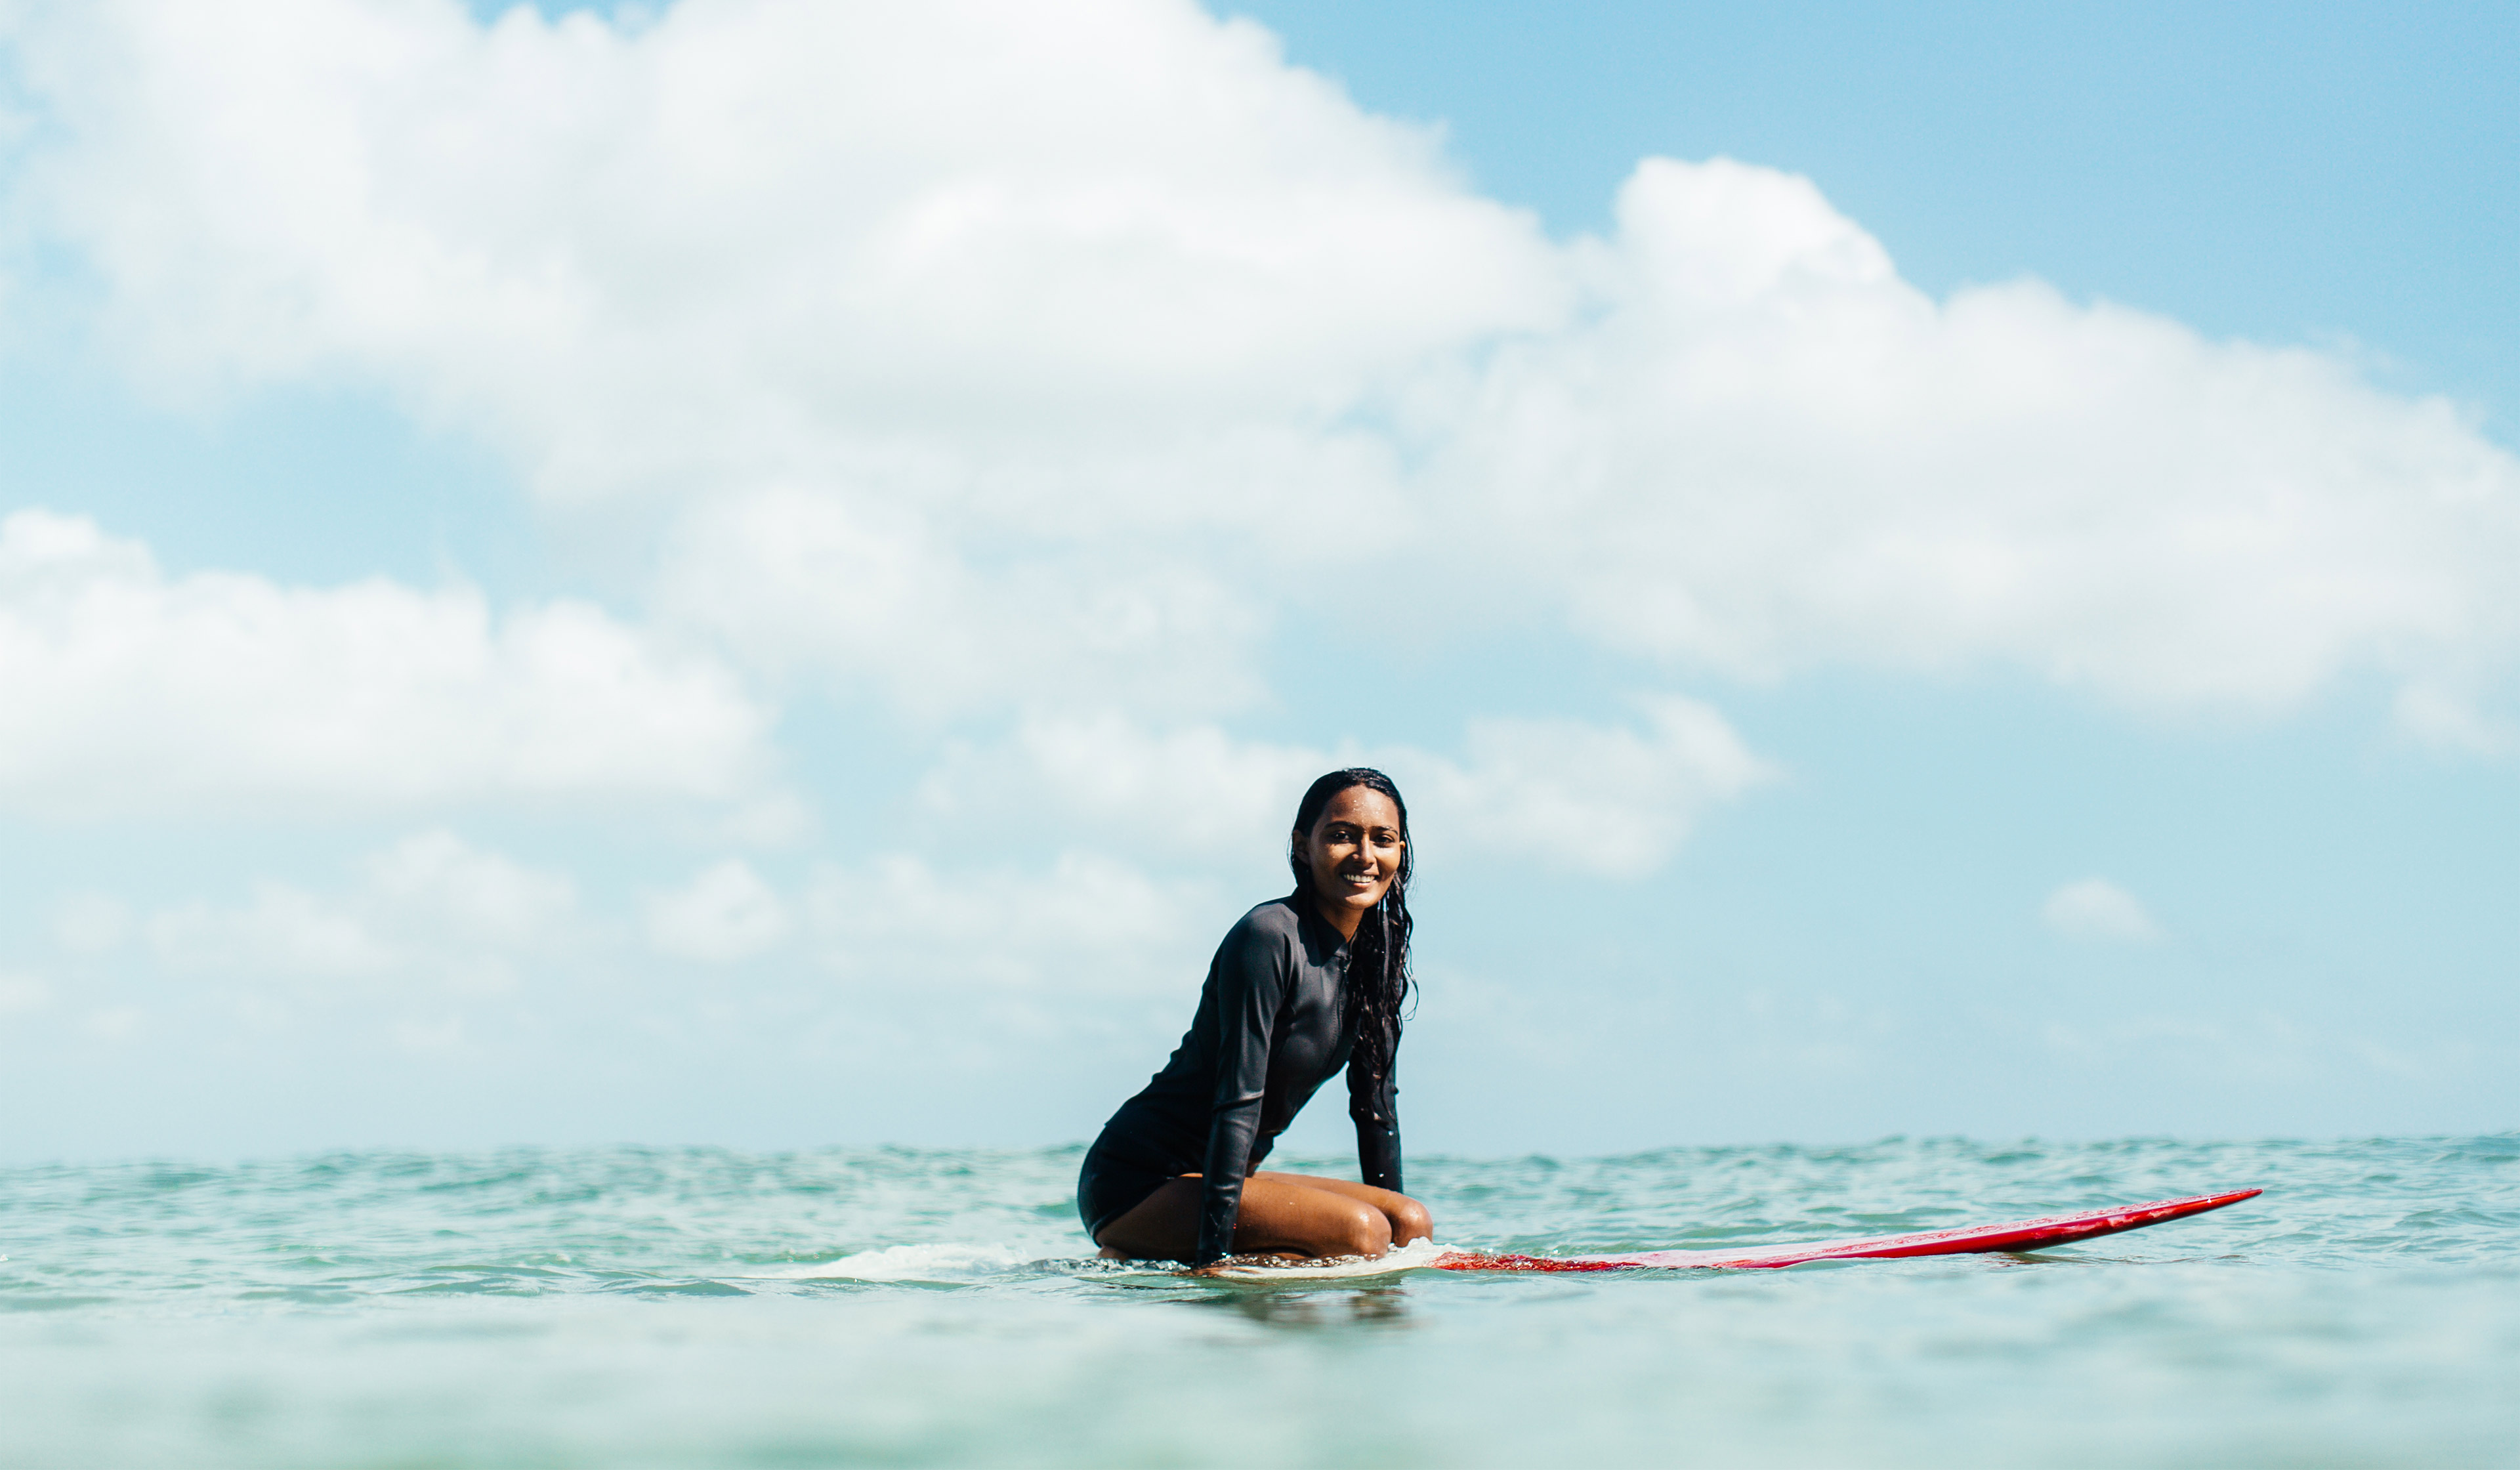 Meet Ishita Malaviya, India's first female surfer